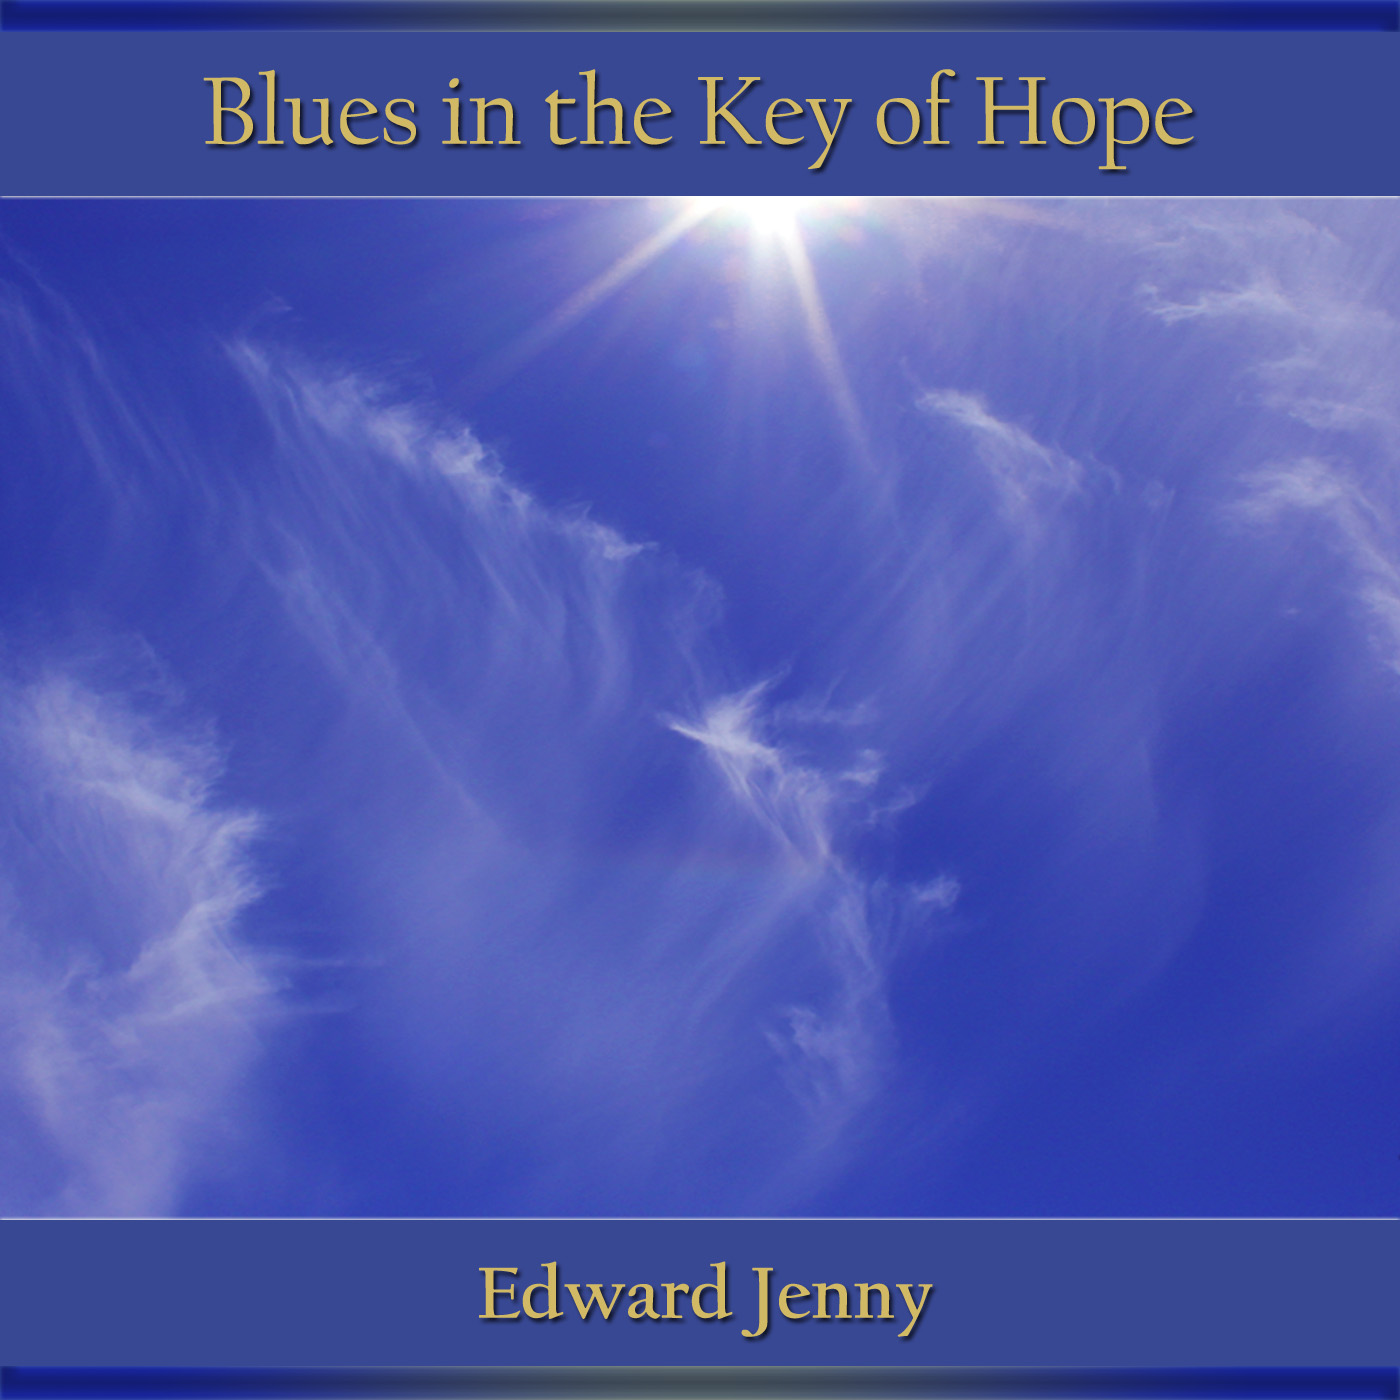 Key of Hope